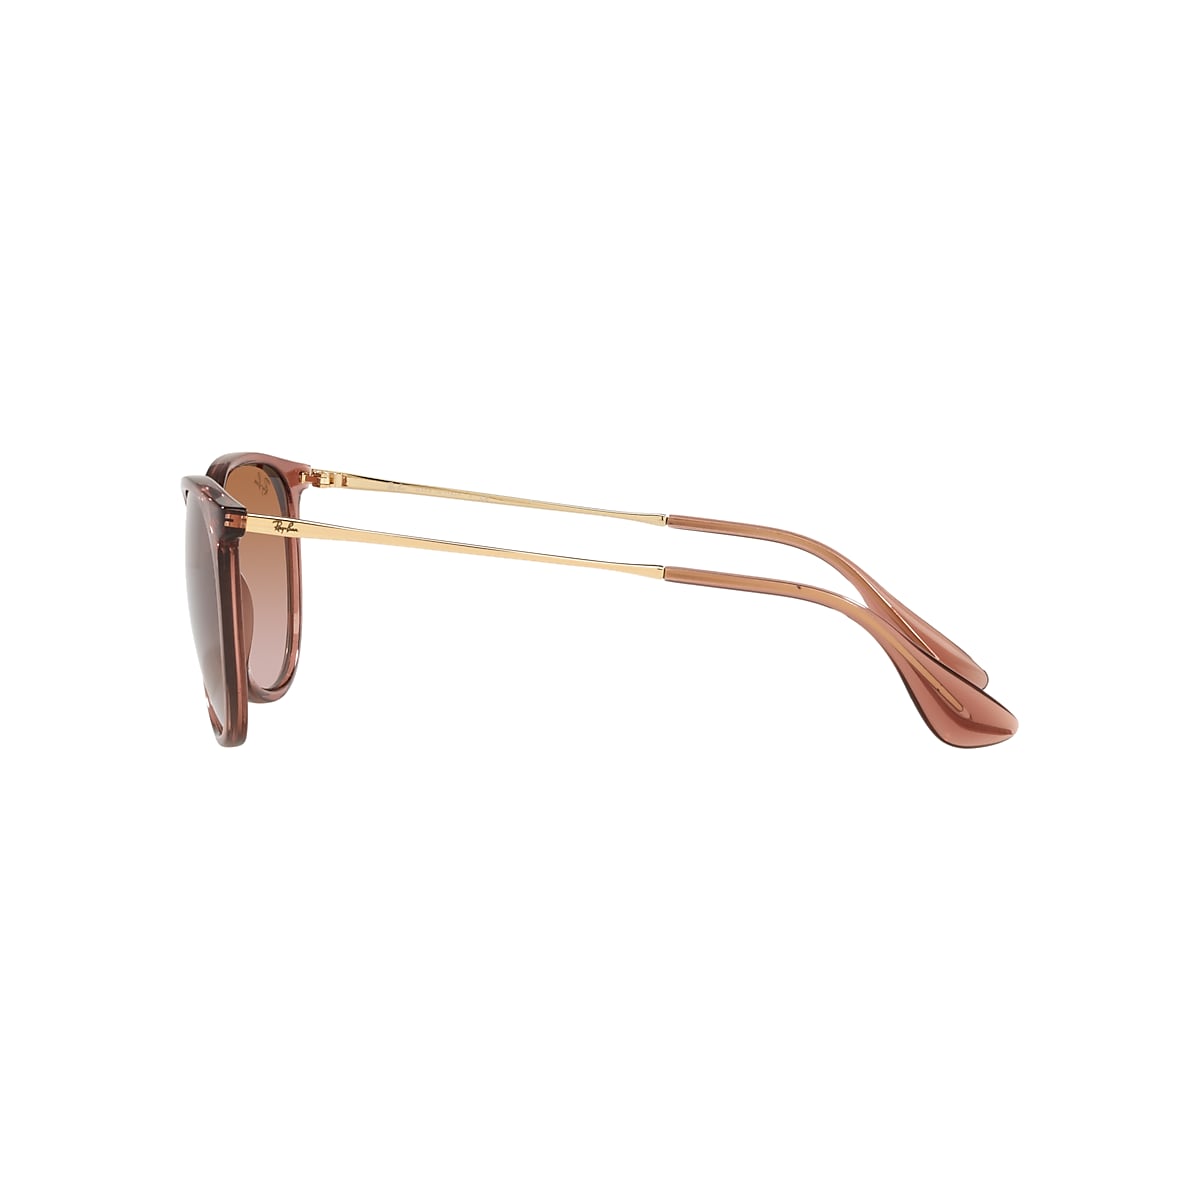 Ray-Ban Transparent Brown Sunglasses, ®